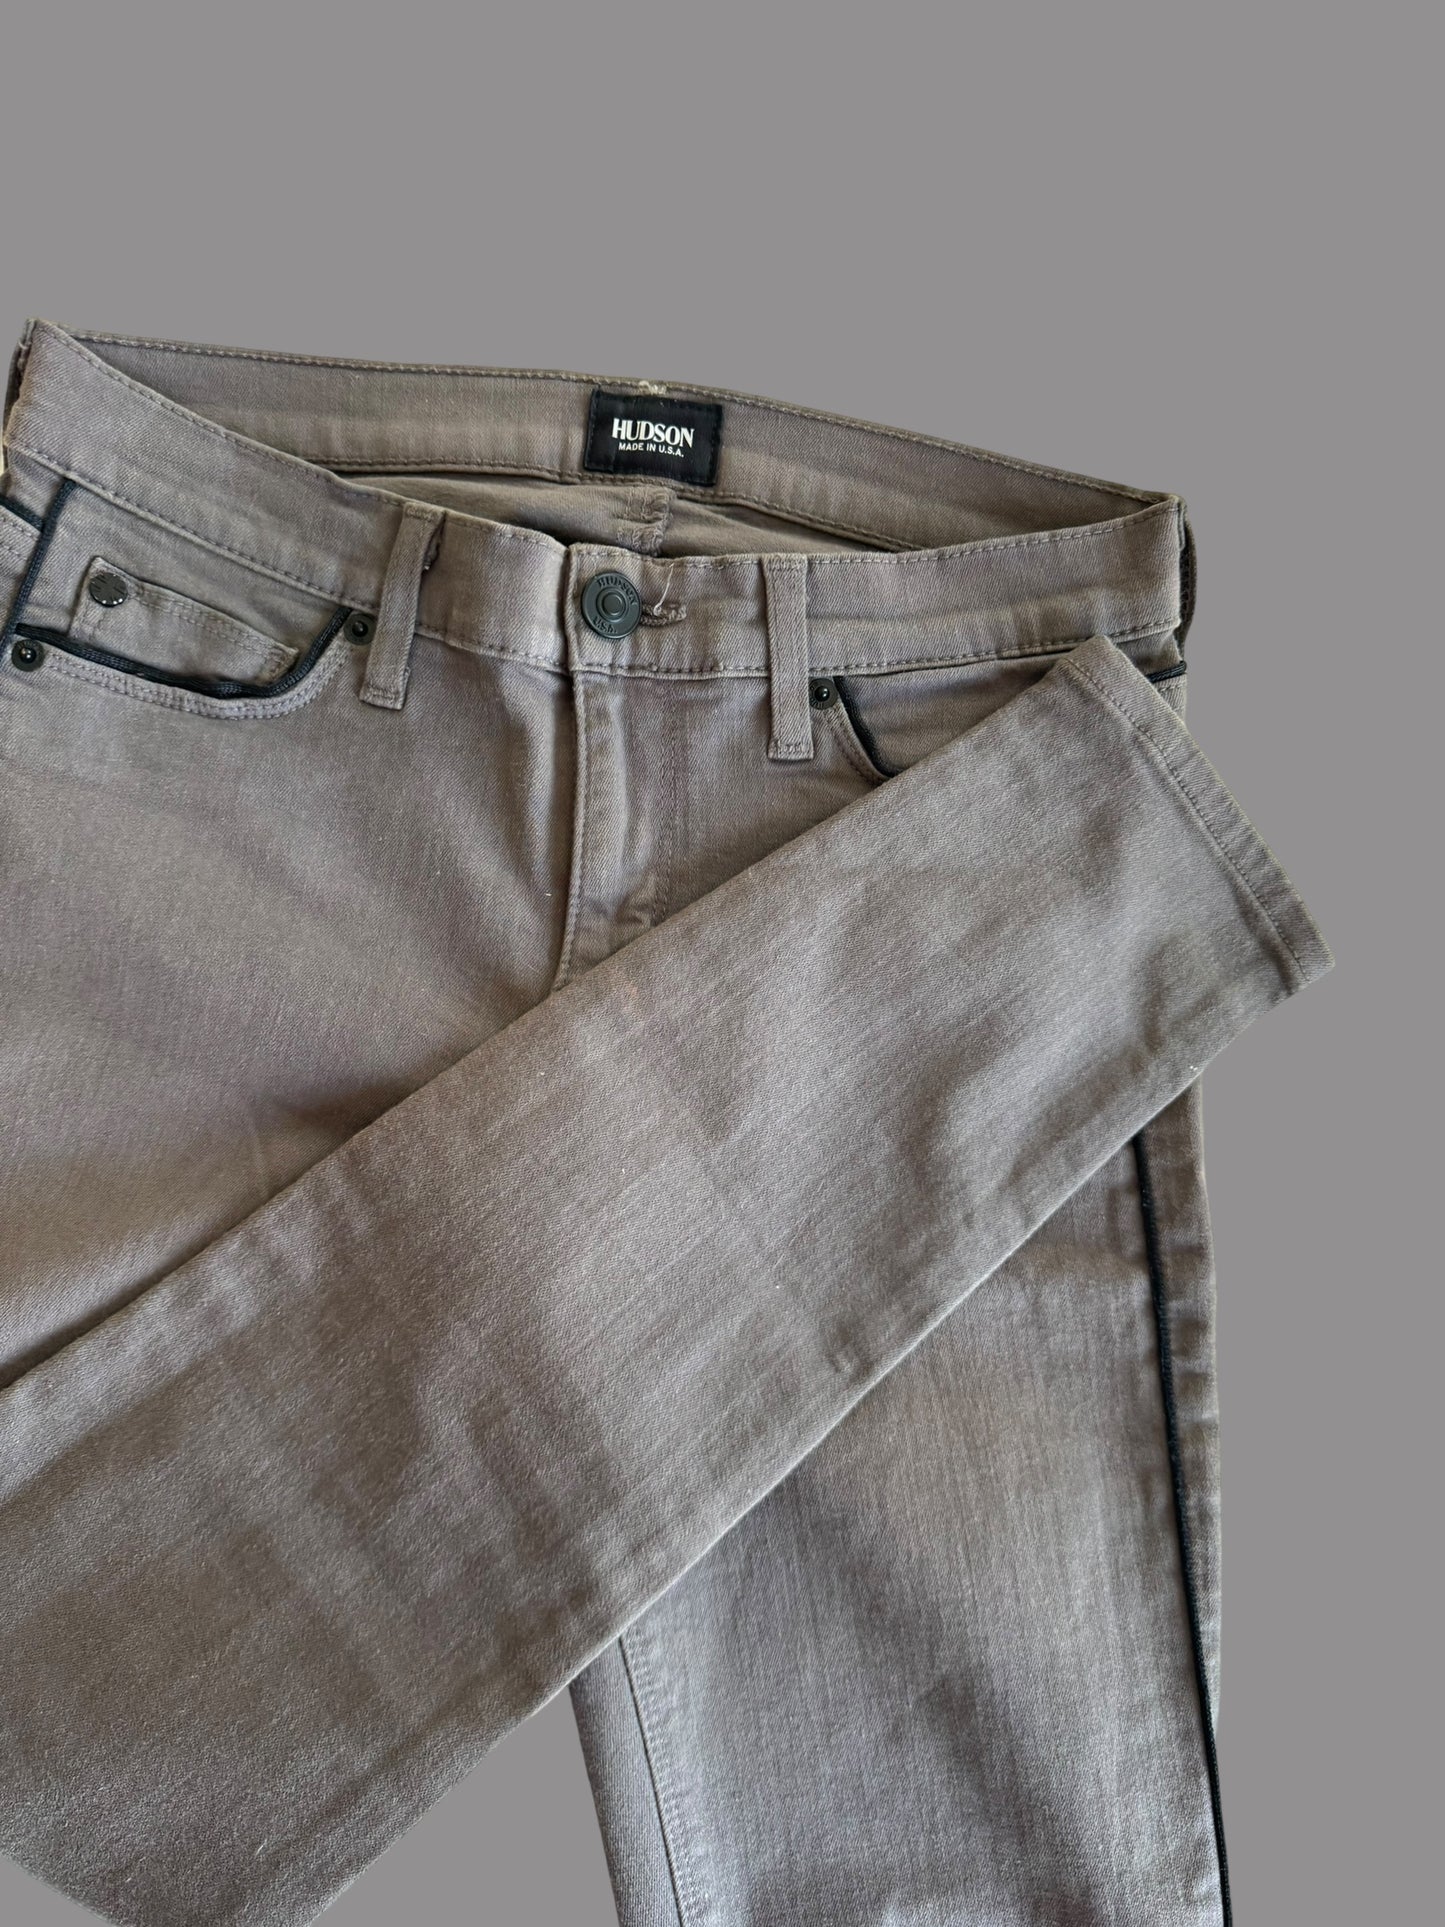 HUDSON grey jeans size 26